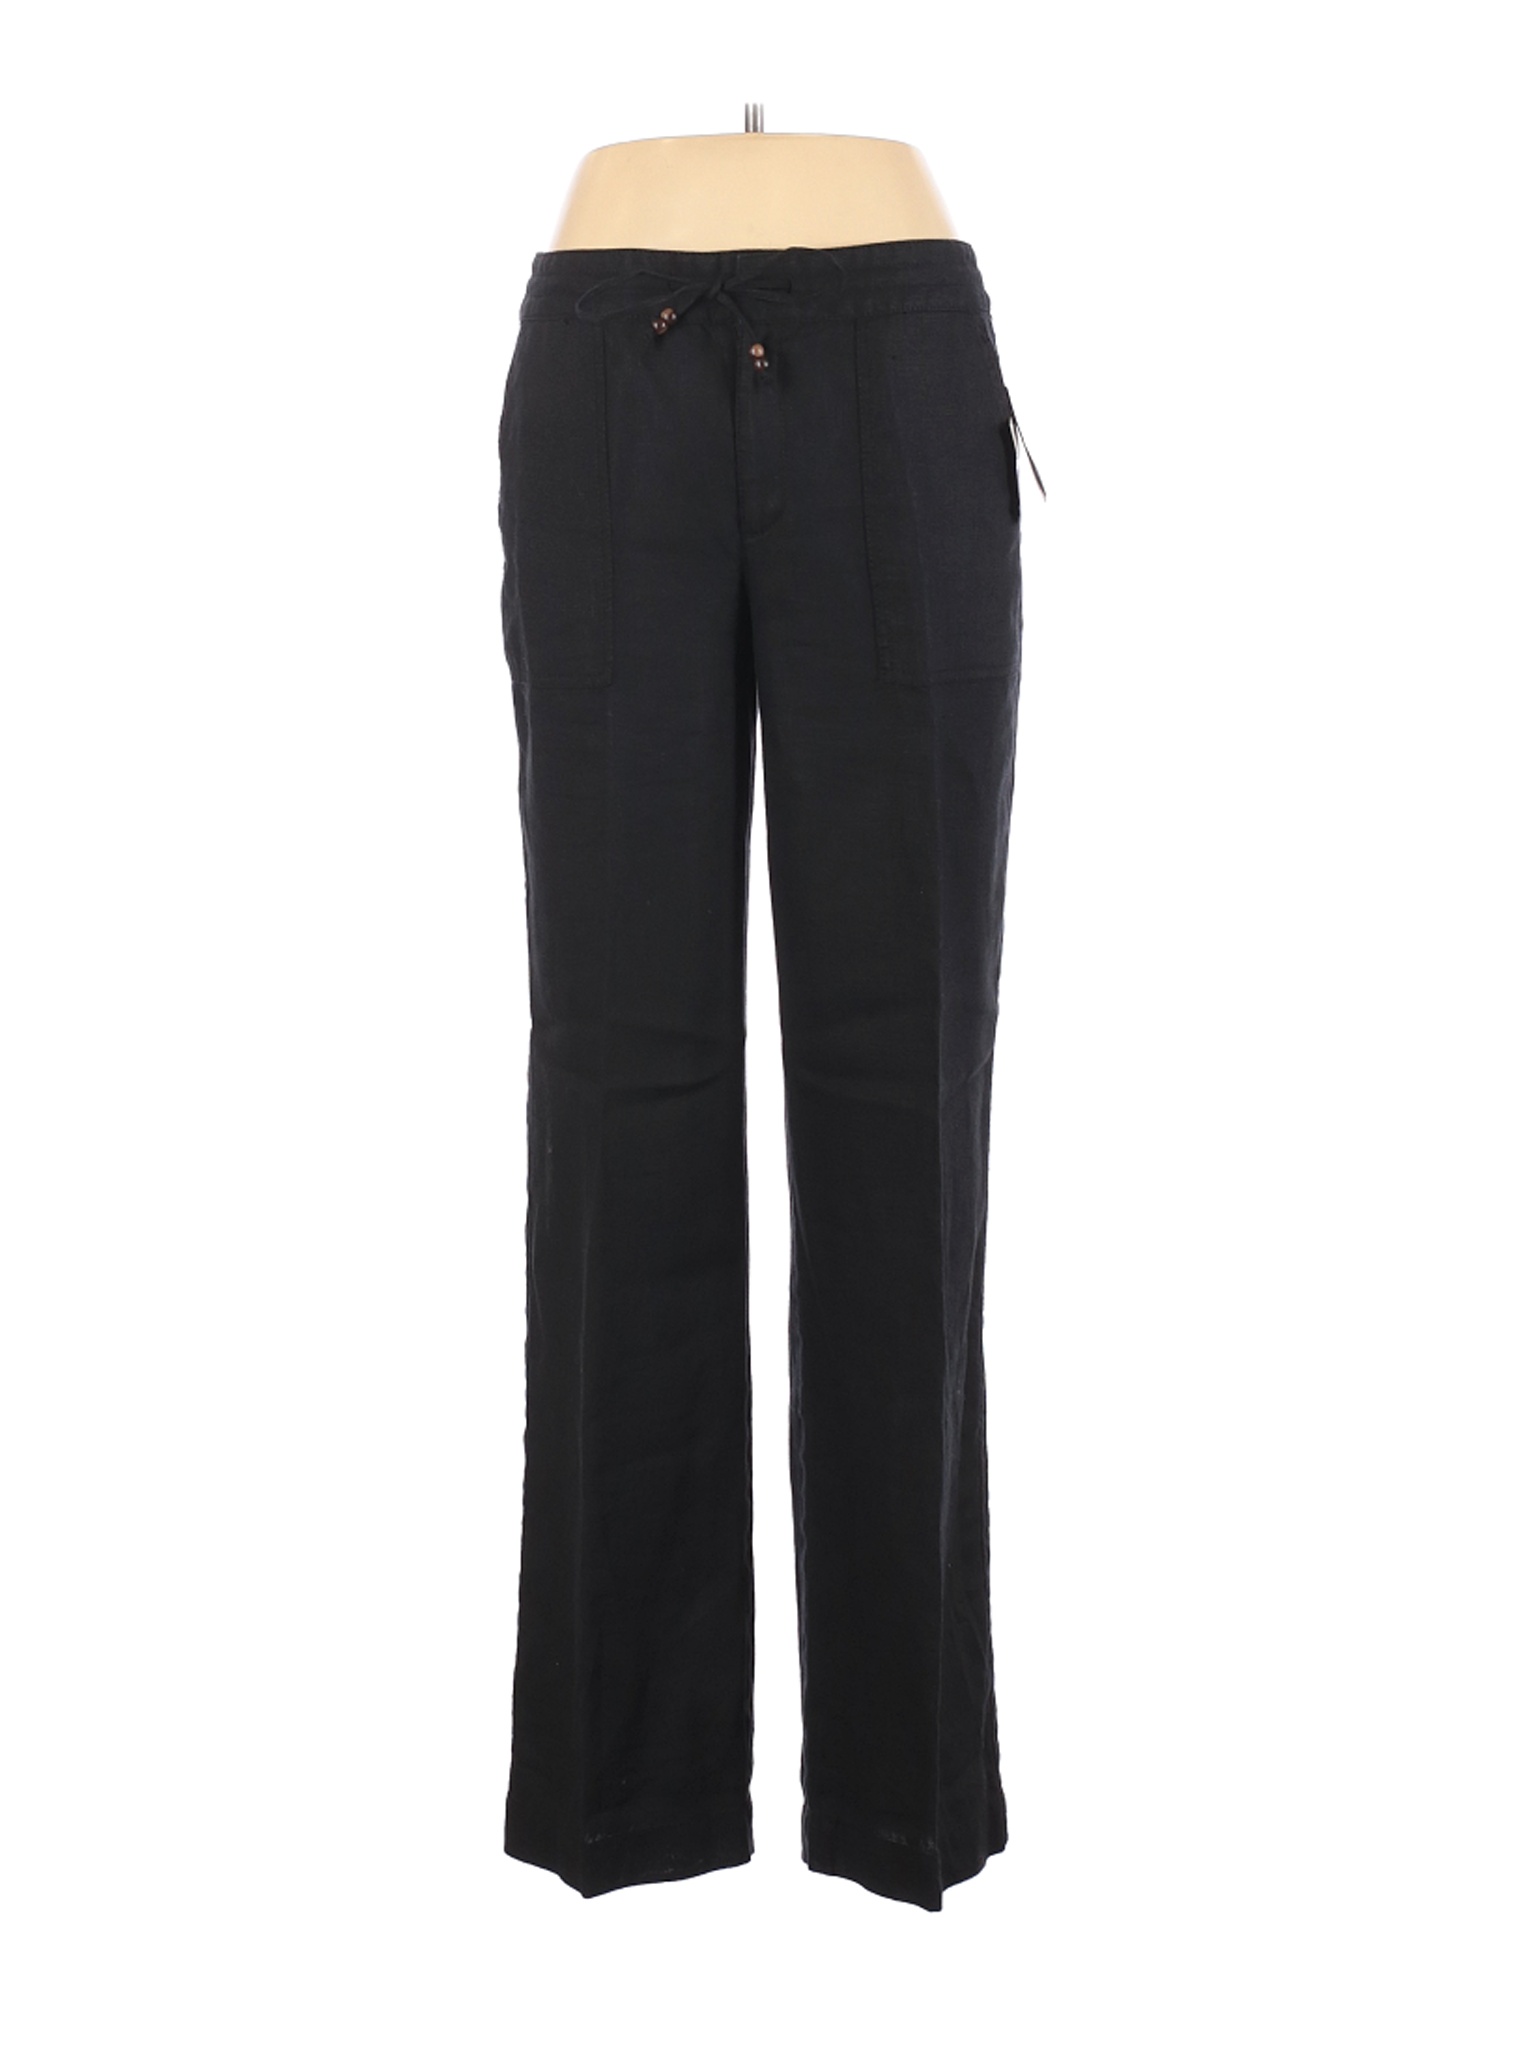 NWT Liz Claiborne Women Black Linen Pants 8 | eBay